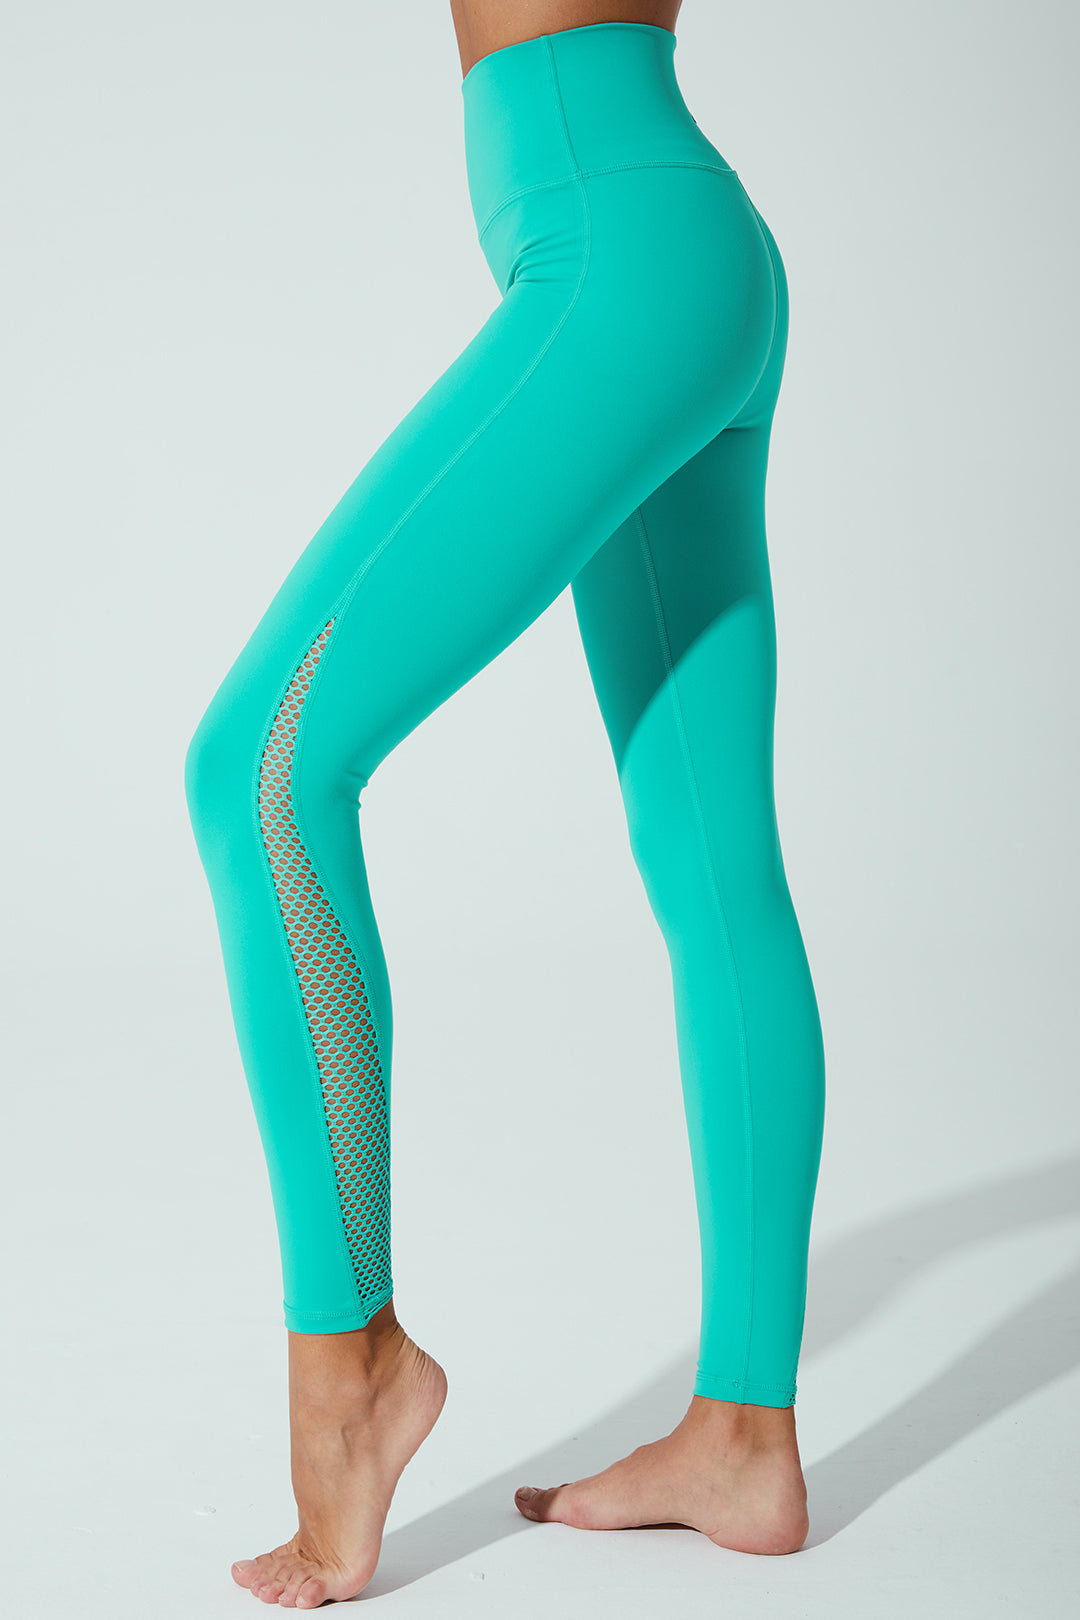 Java green Clarita mesh leggings for women, style OW-0100-WLG-GN, shown in image 1.